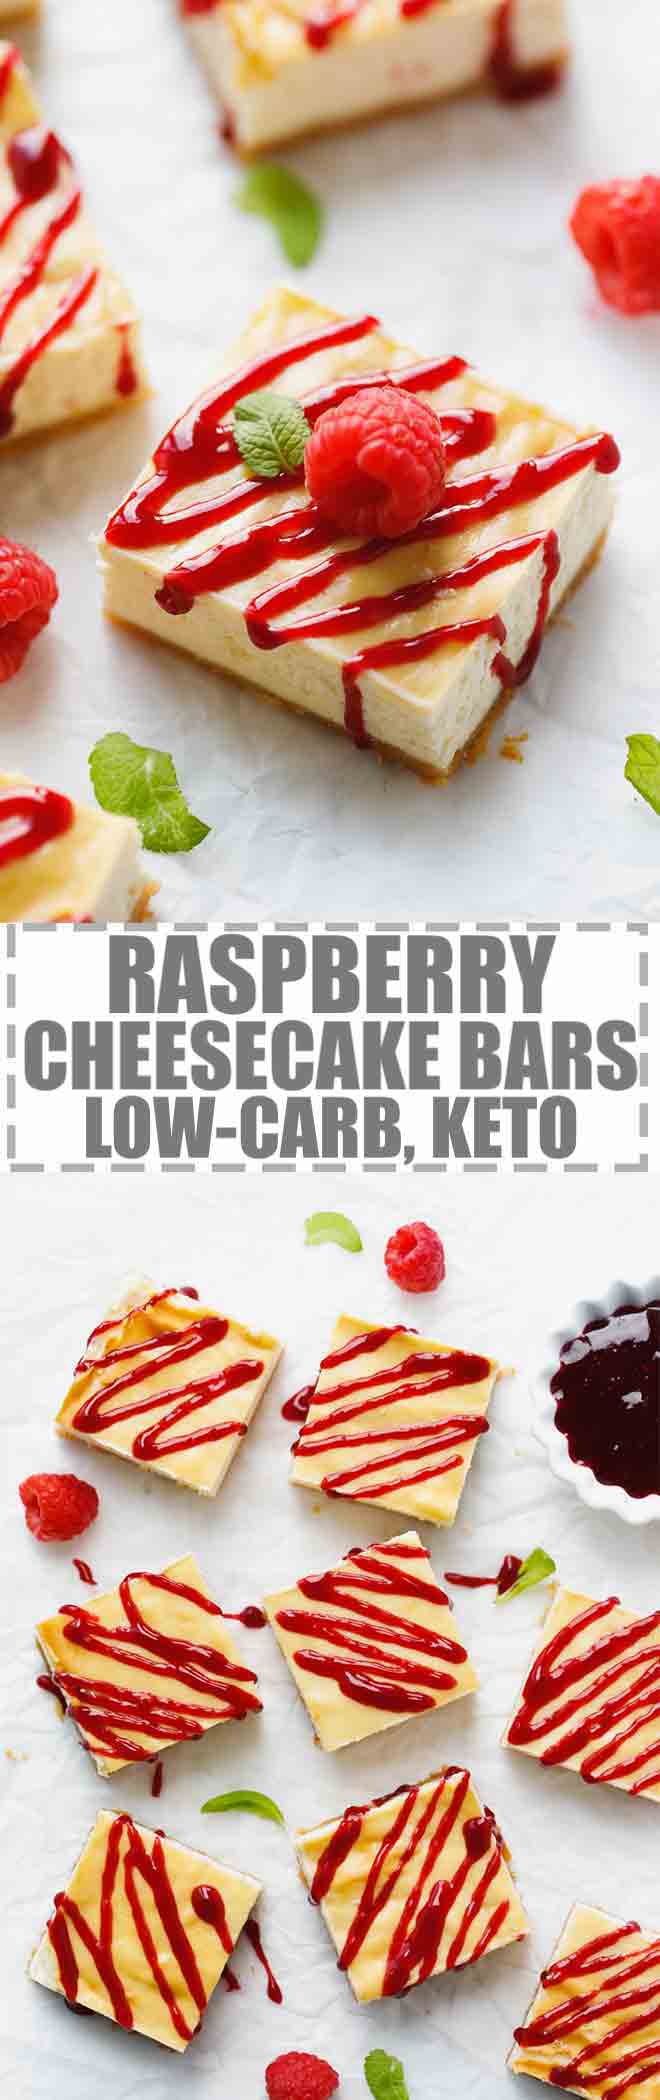 Raspberry Cheesecake Bars - Low-Carb, Keto, Gluten-Free ...